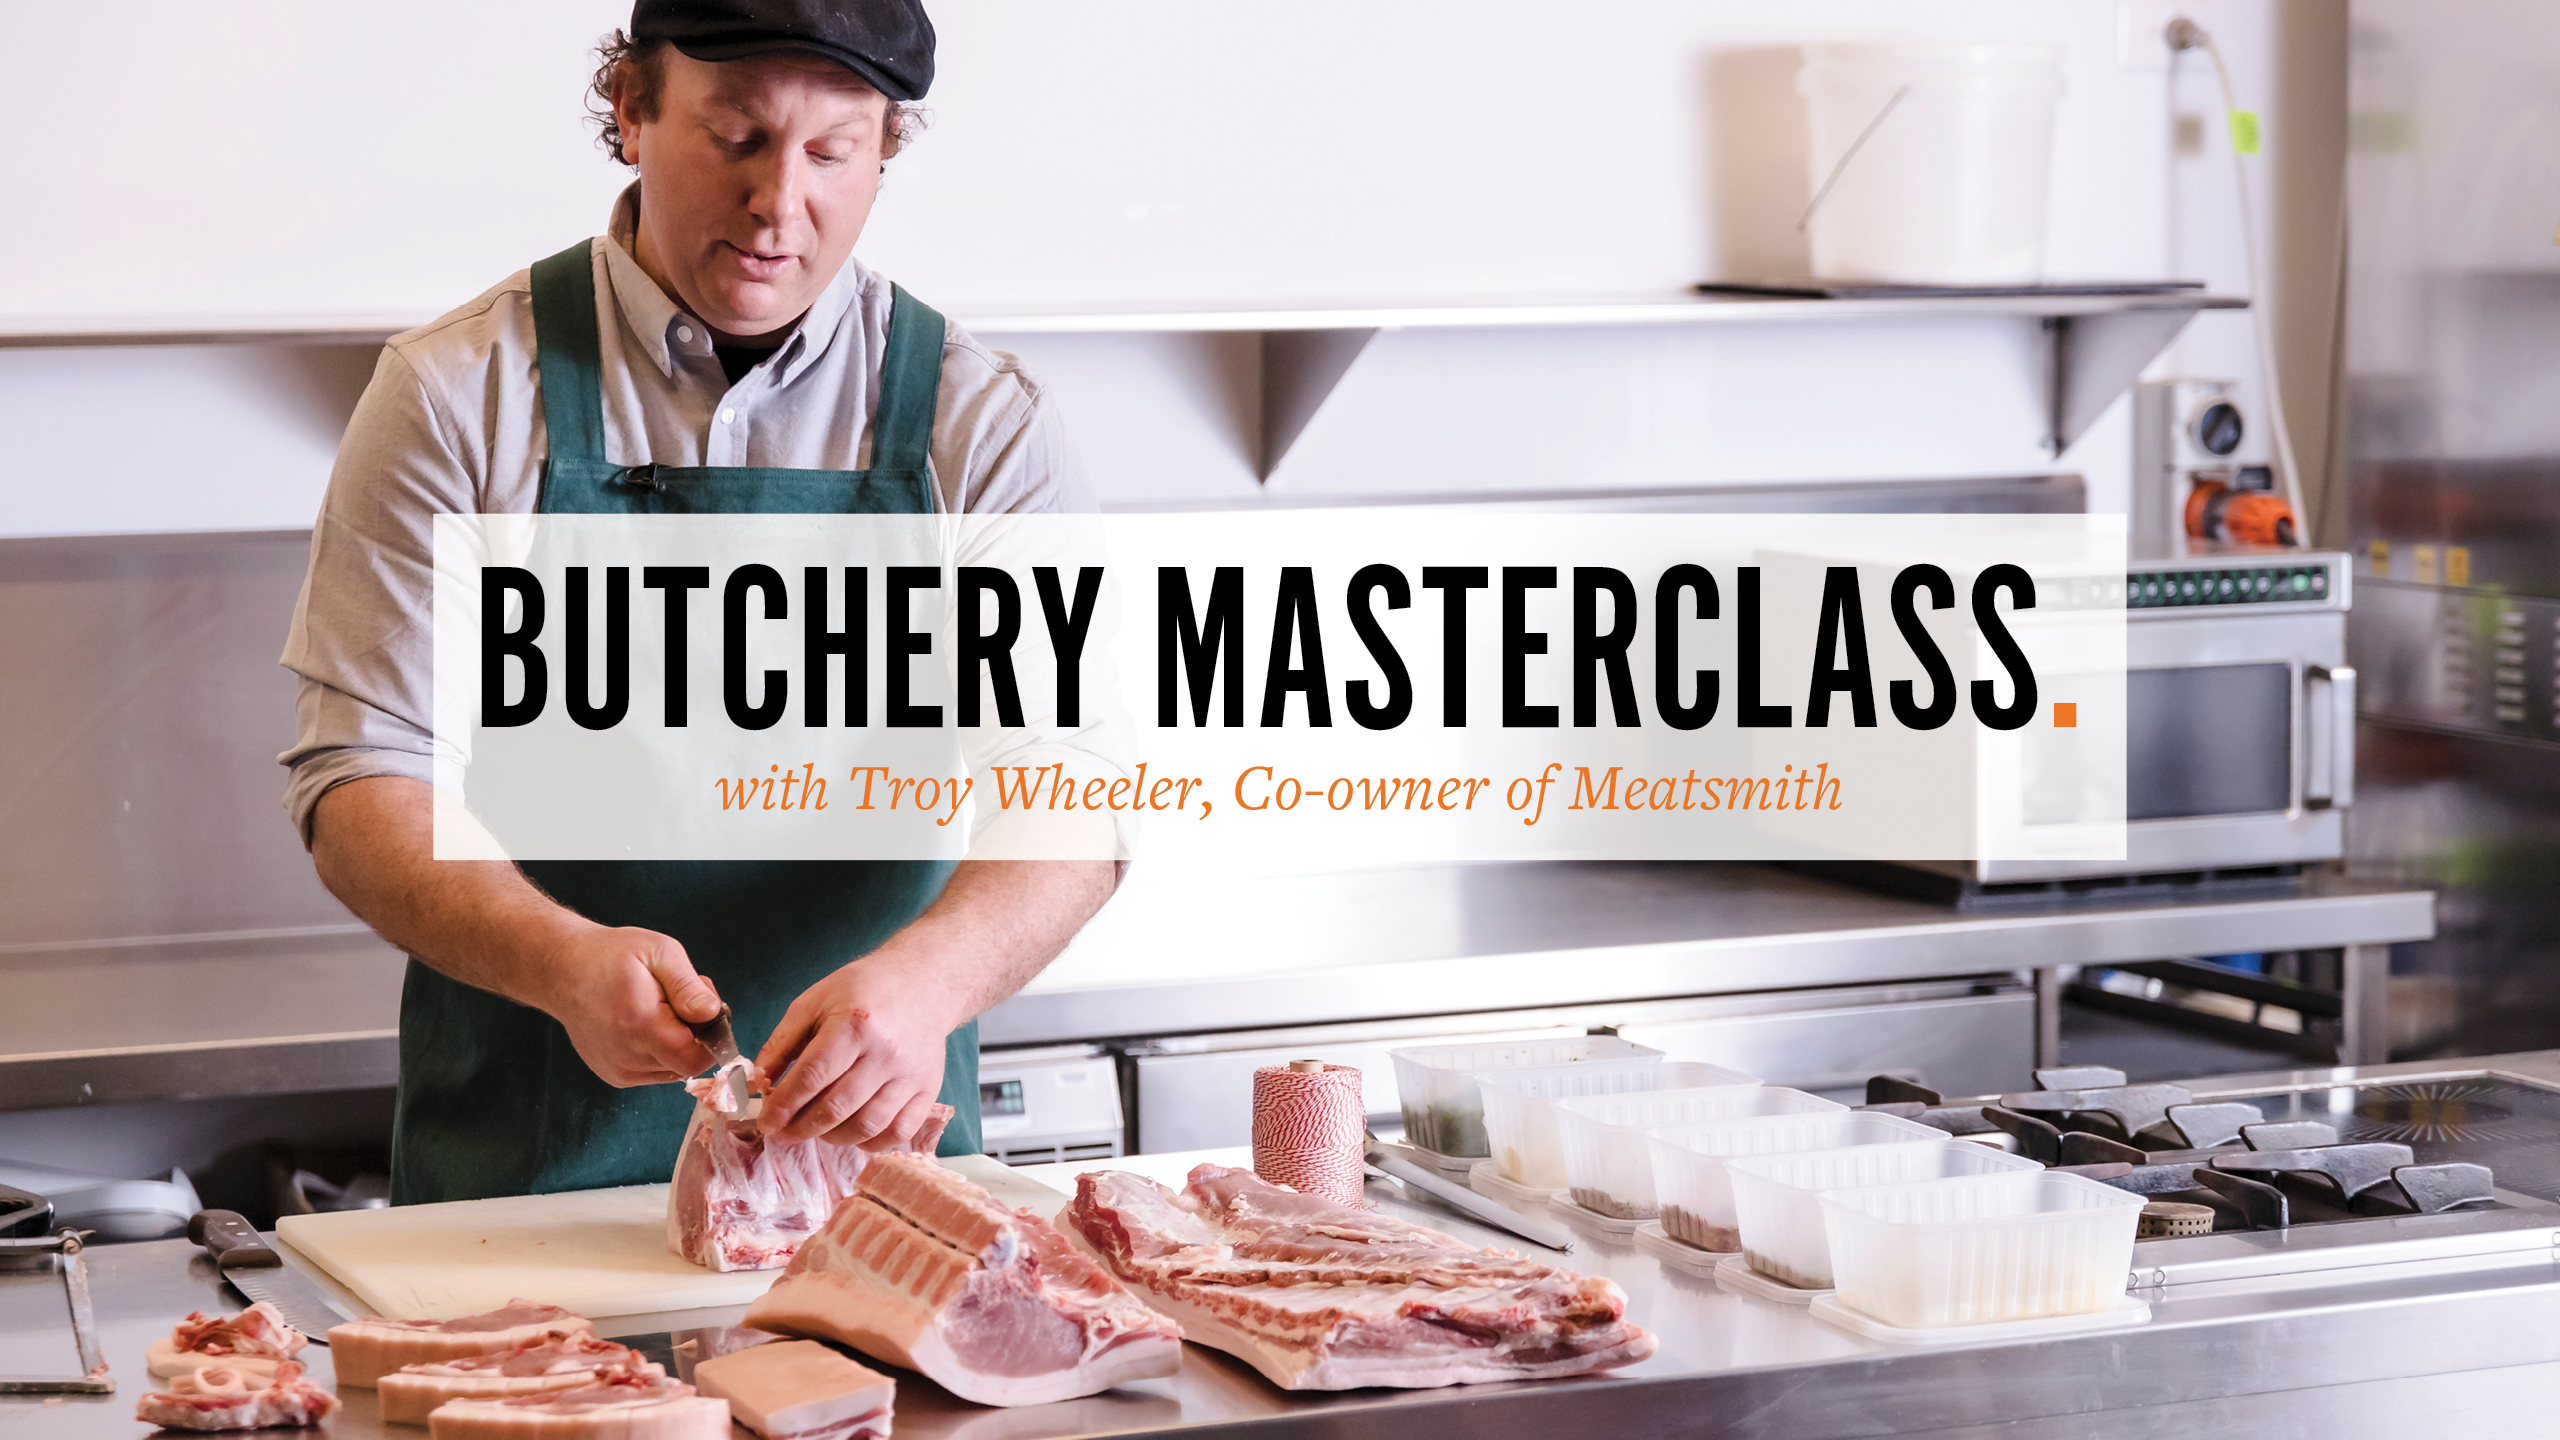 Masterclasses Video Tile - 384x216_Butchery V2.jpg